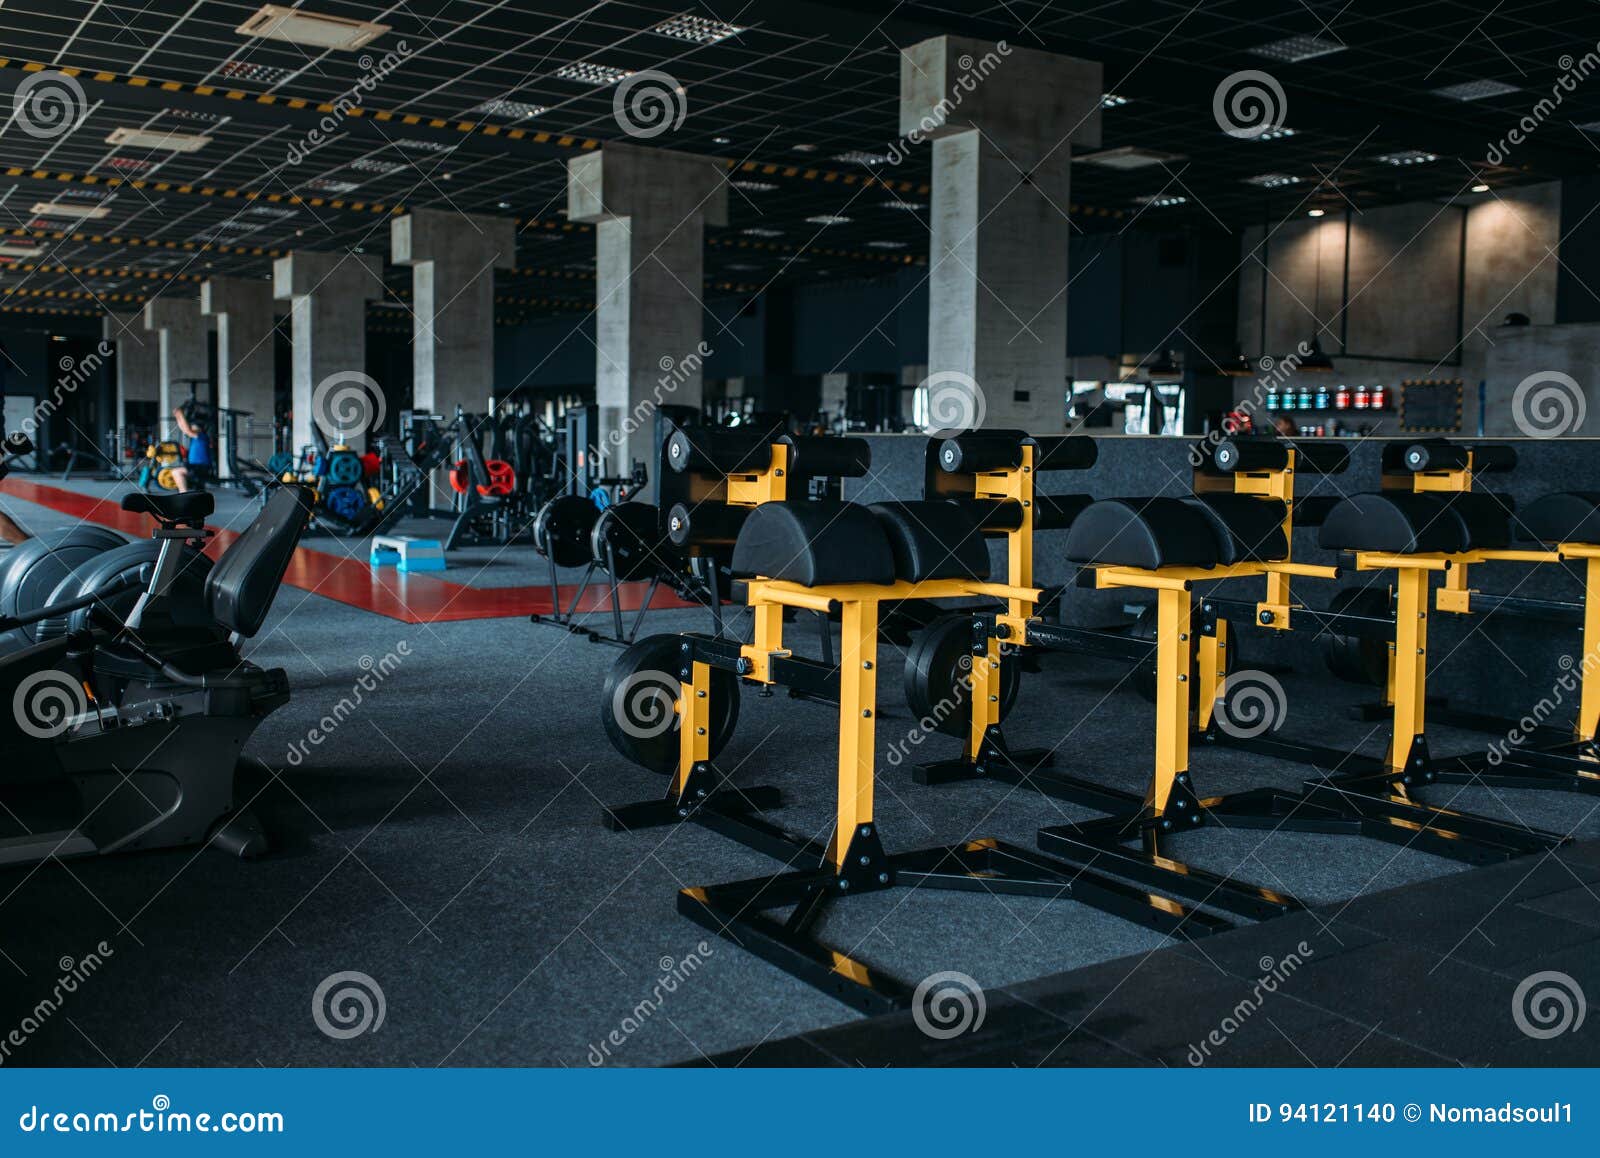 fitness club interior. gym nobody